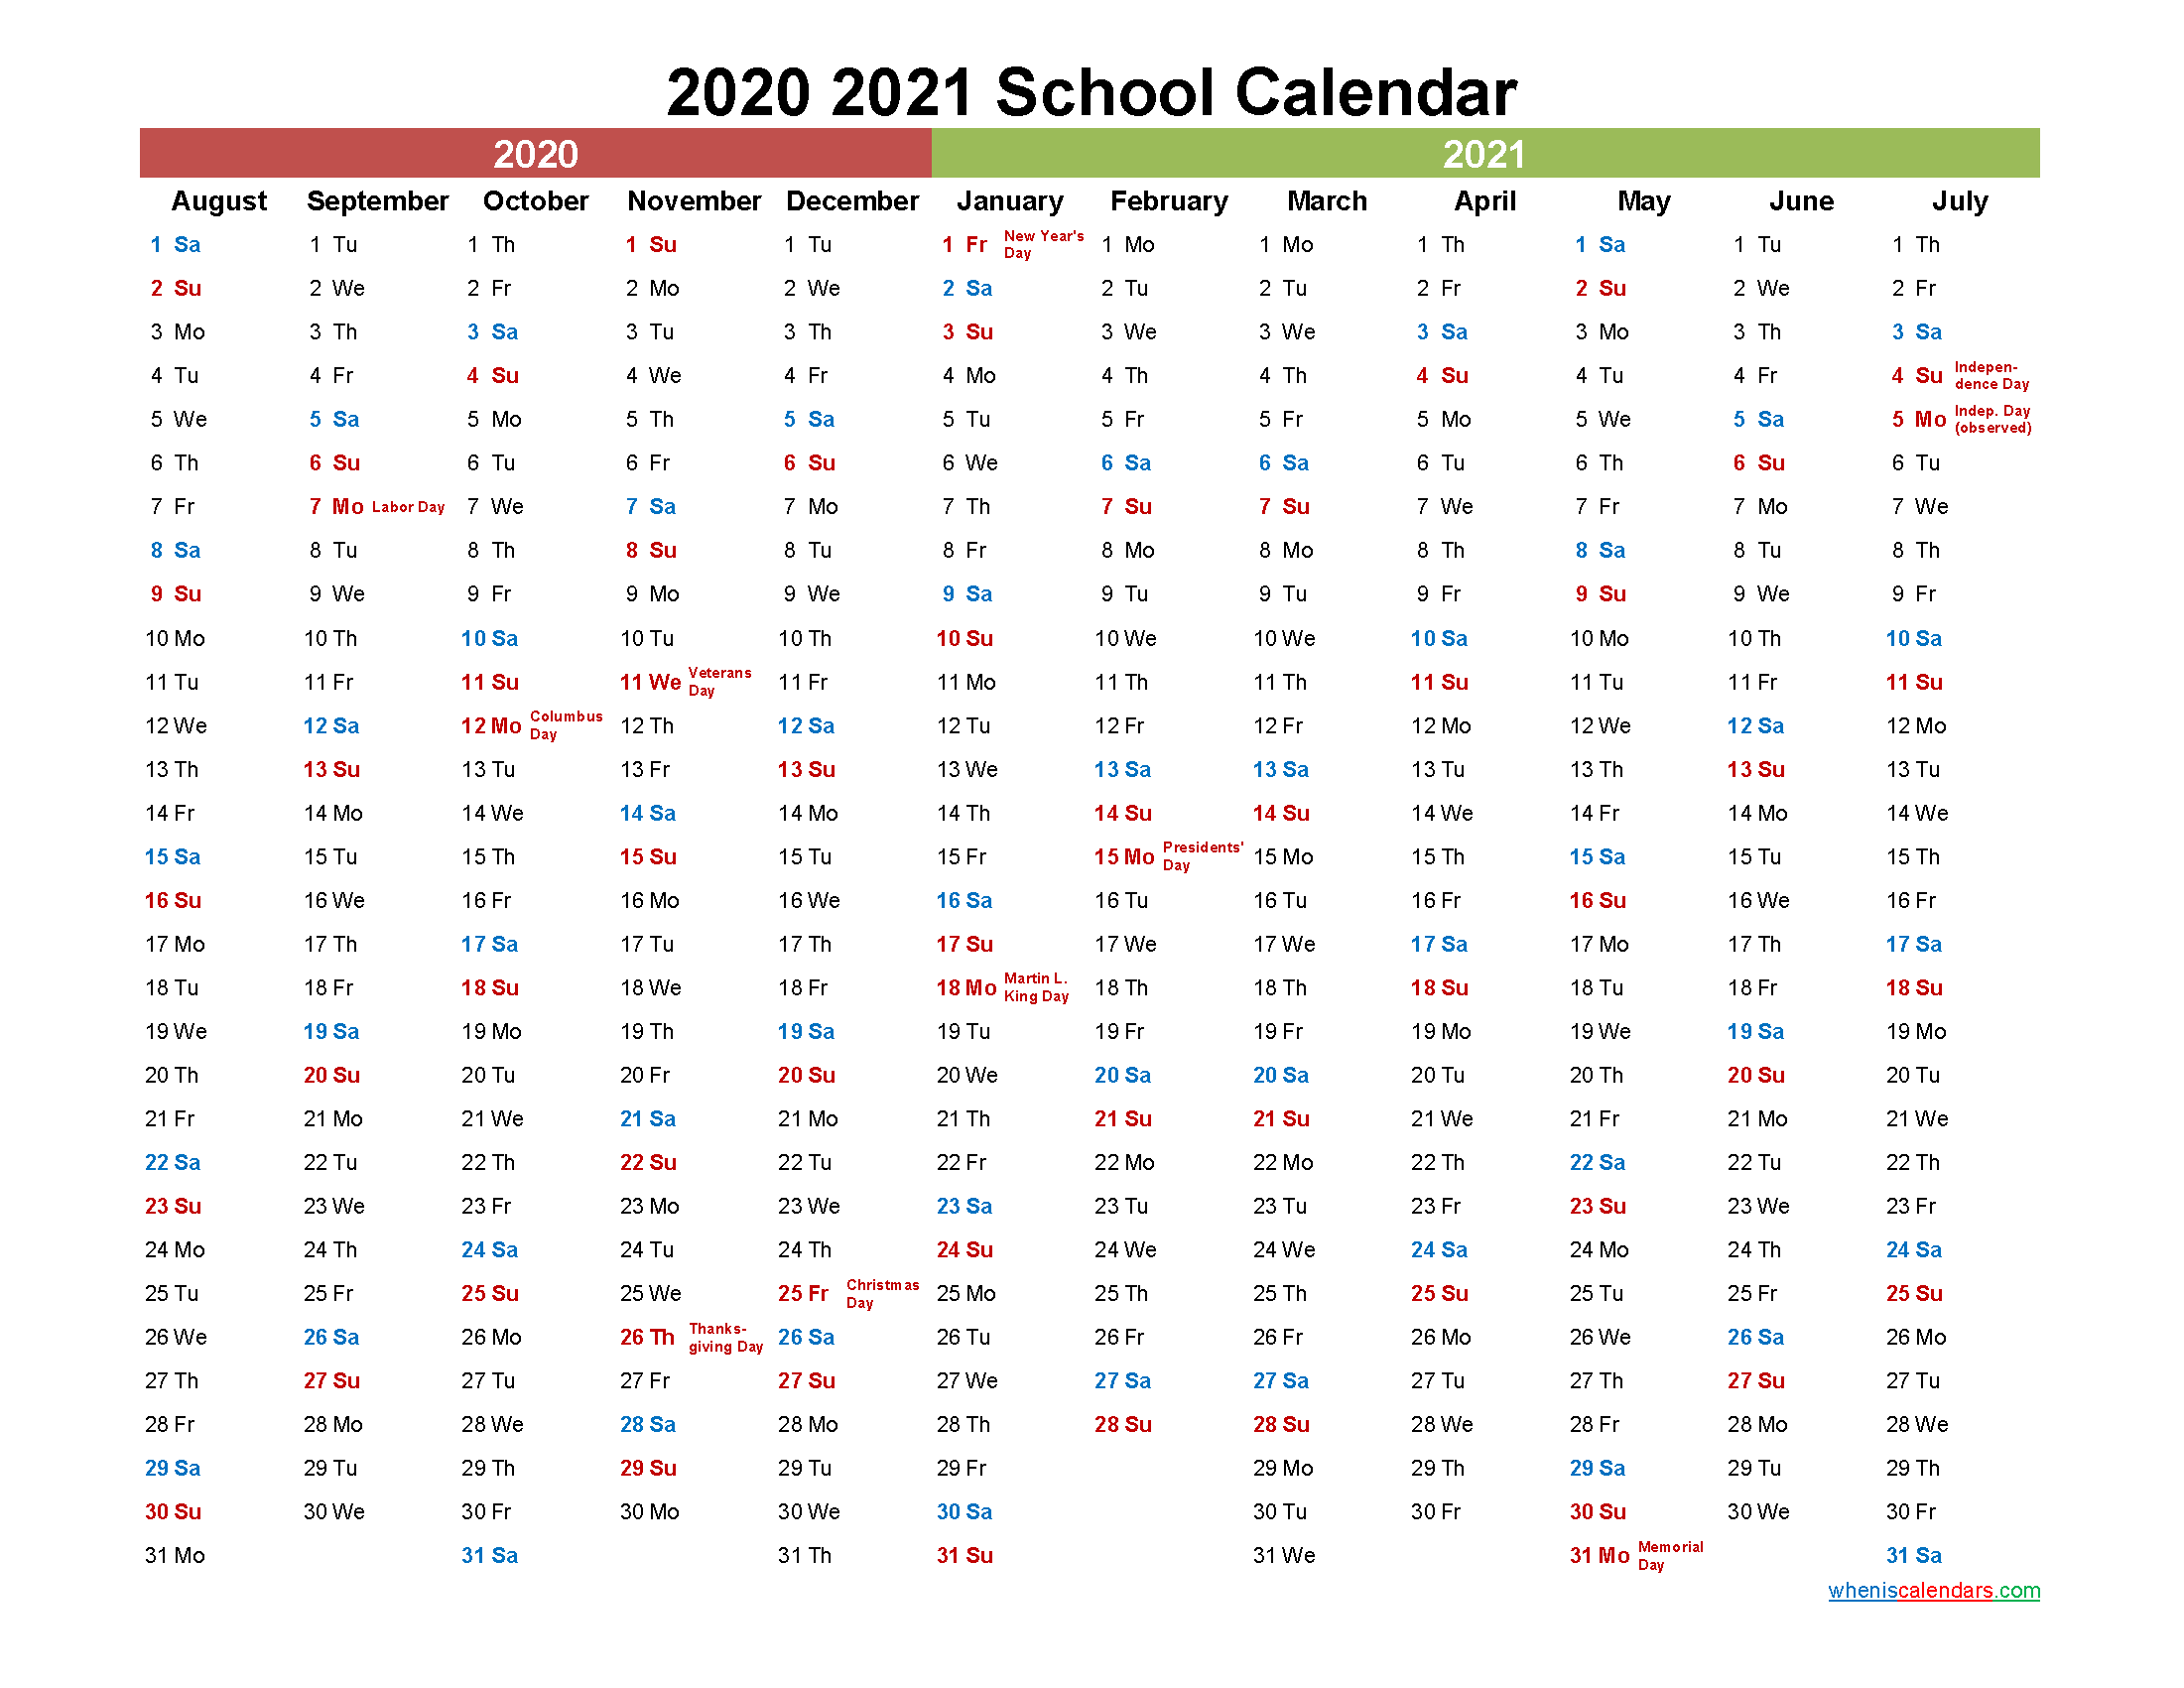 2020 and 2021 School Calendar Printable - Template No.21scl31